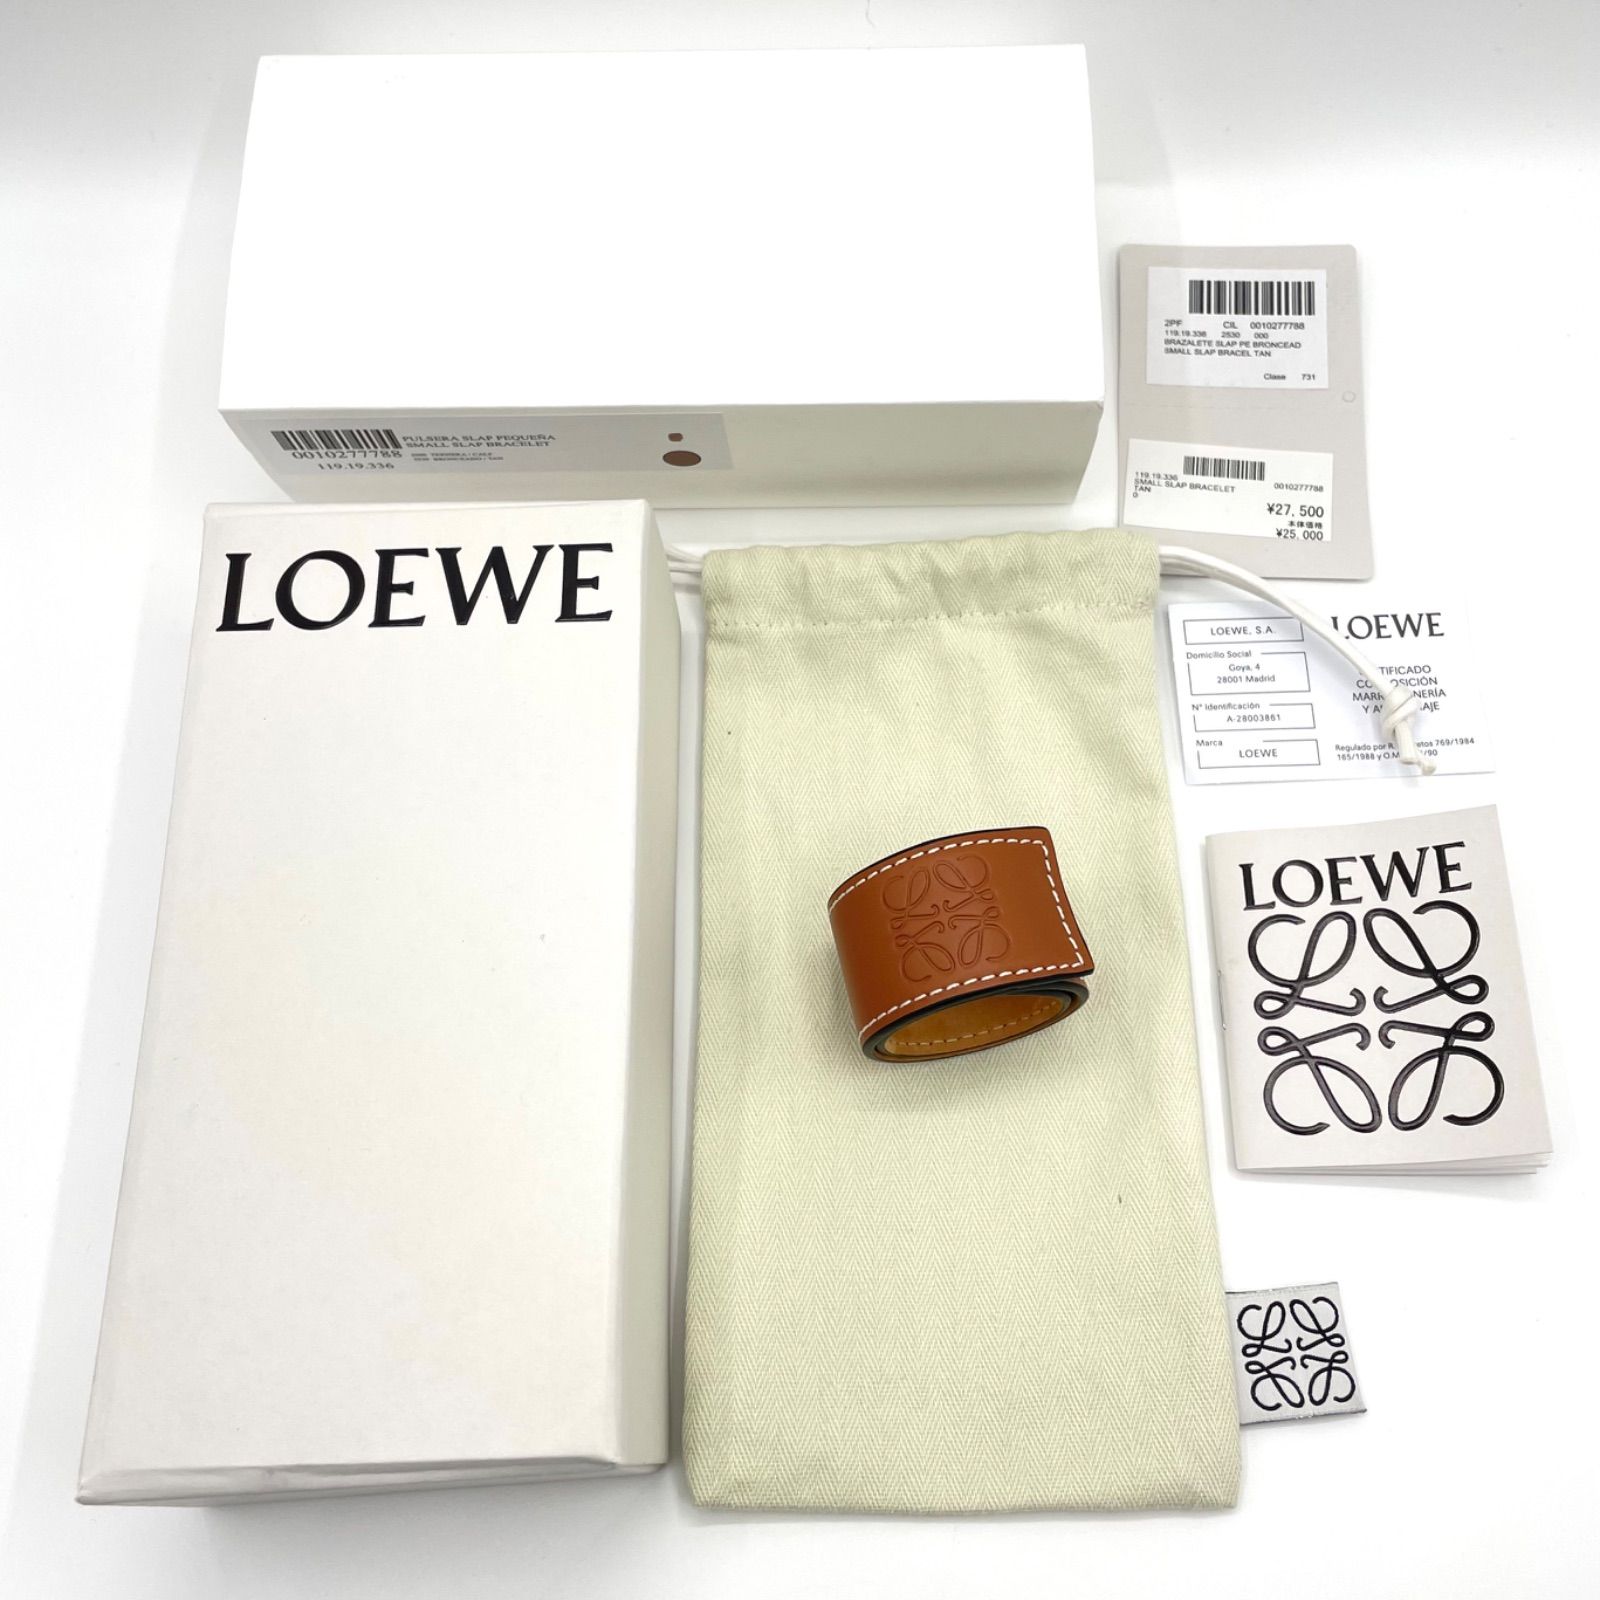 LOEWE ロエベ スラップ ブレスレット スモール カーフ タンレザー 箱 保存袋 冊子 タグ 未使用保管品 牛革 ブラウン系